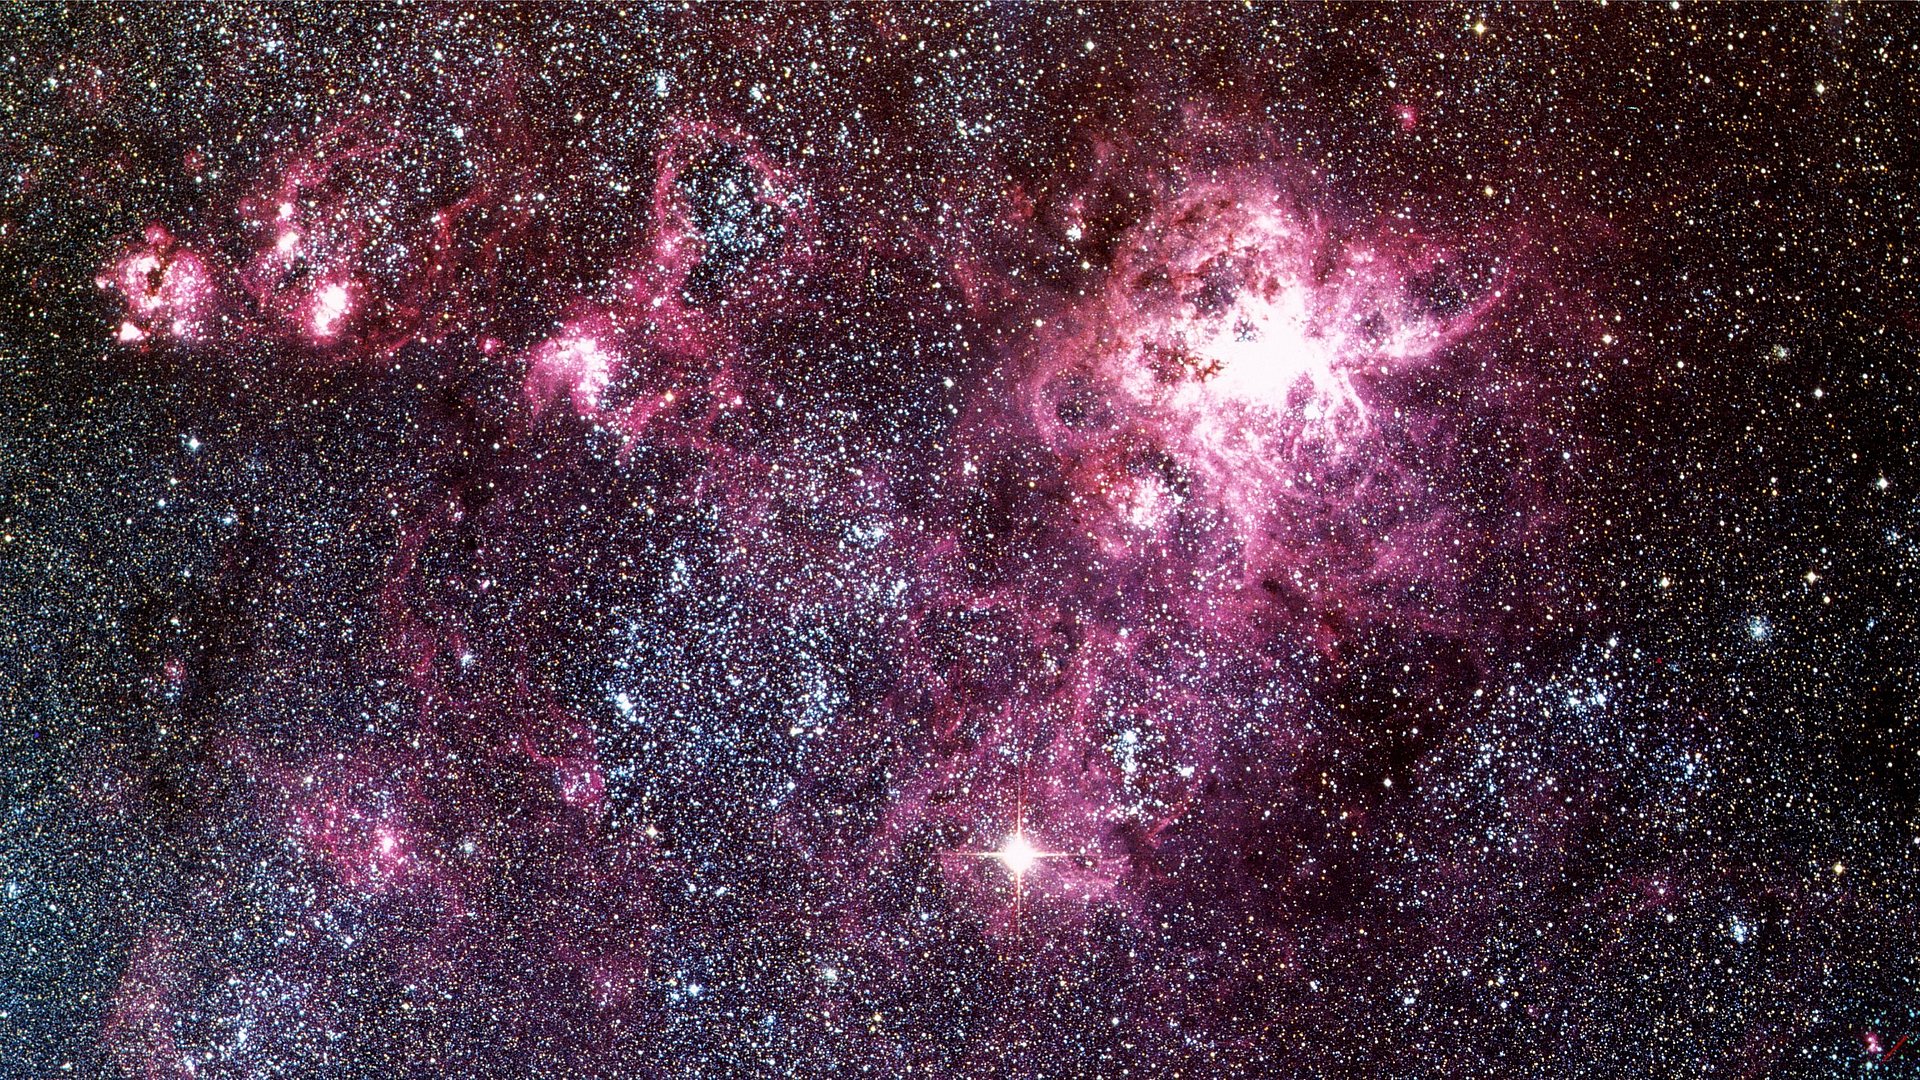 Tarantula Nebula in the Large Magellanic Cloud, obtained with the ESO Schmidt Telescope.